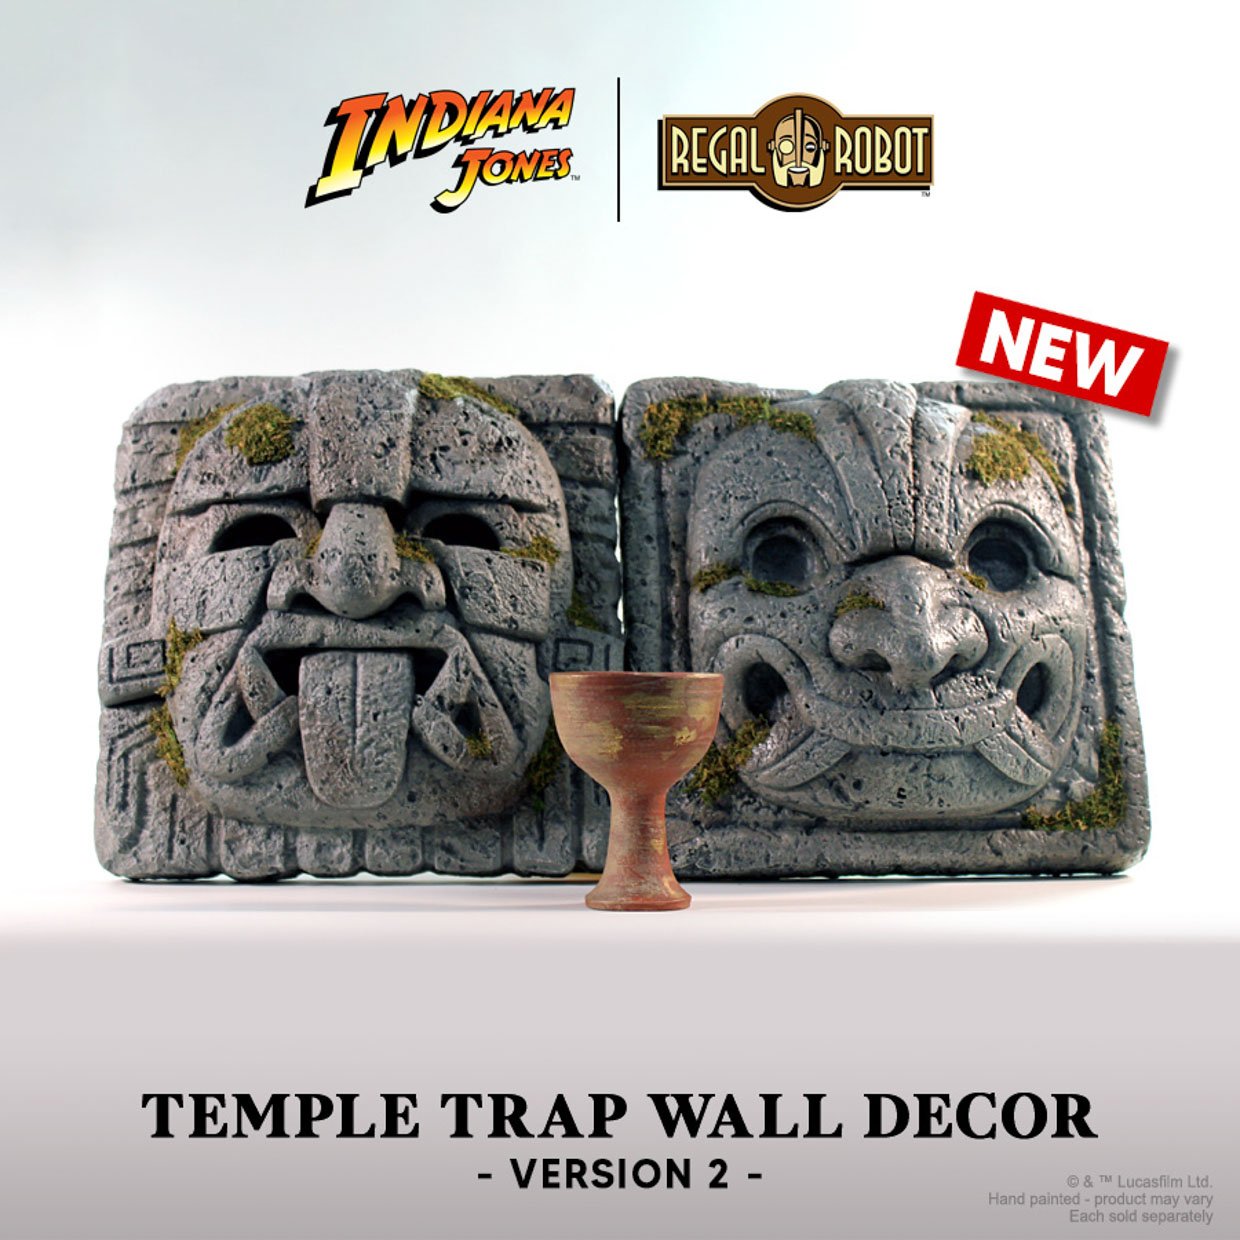 Indiana Jones Temple Trap Wall Decor